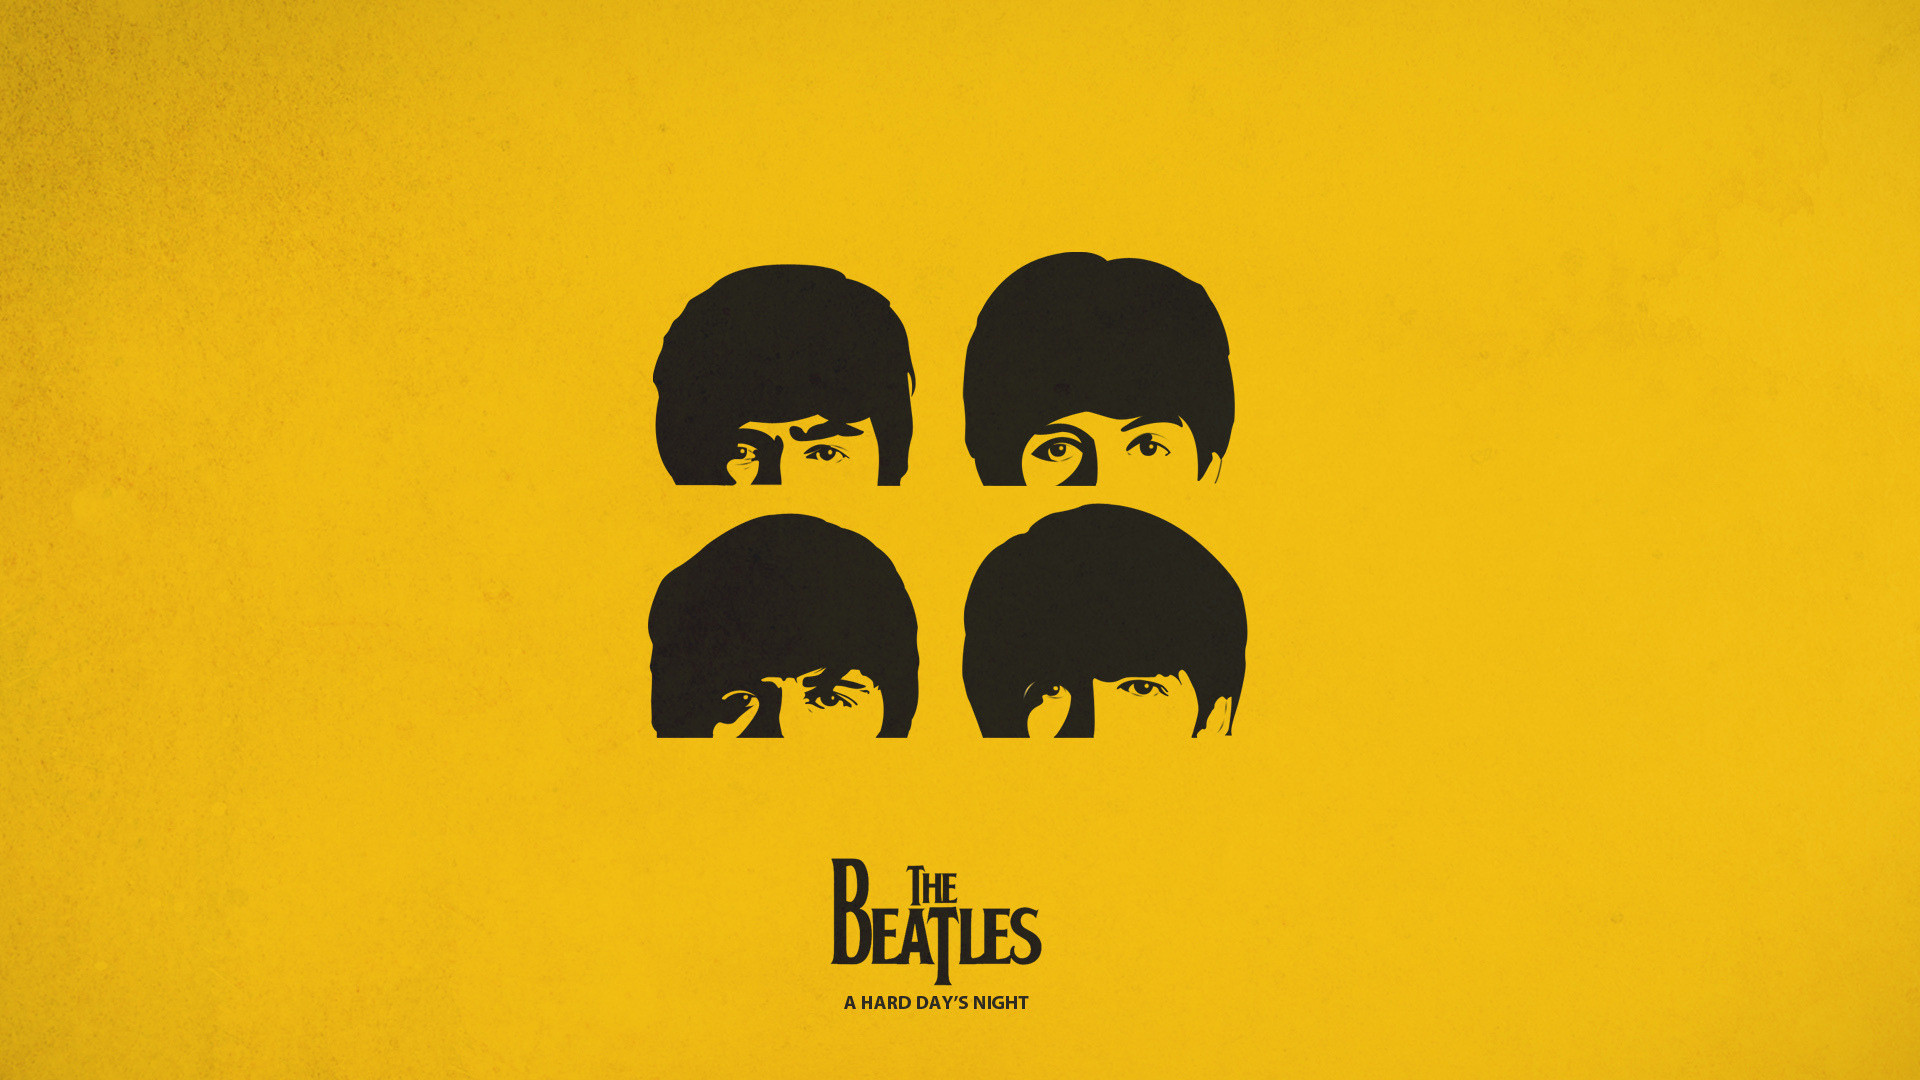 1920x1080 Beatles, simple, graphics, a hard days night, Ringo Starr, George Harrison